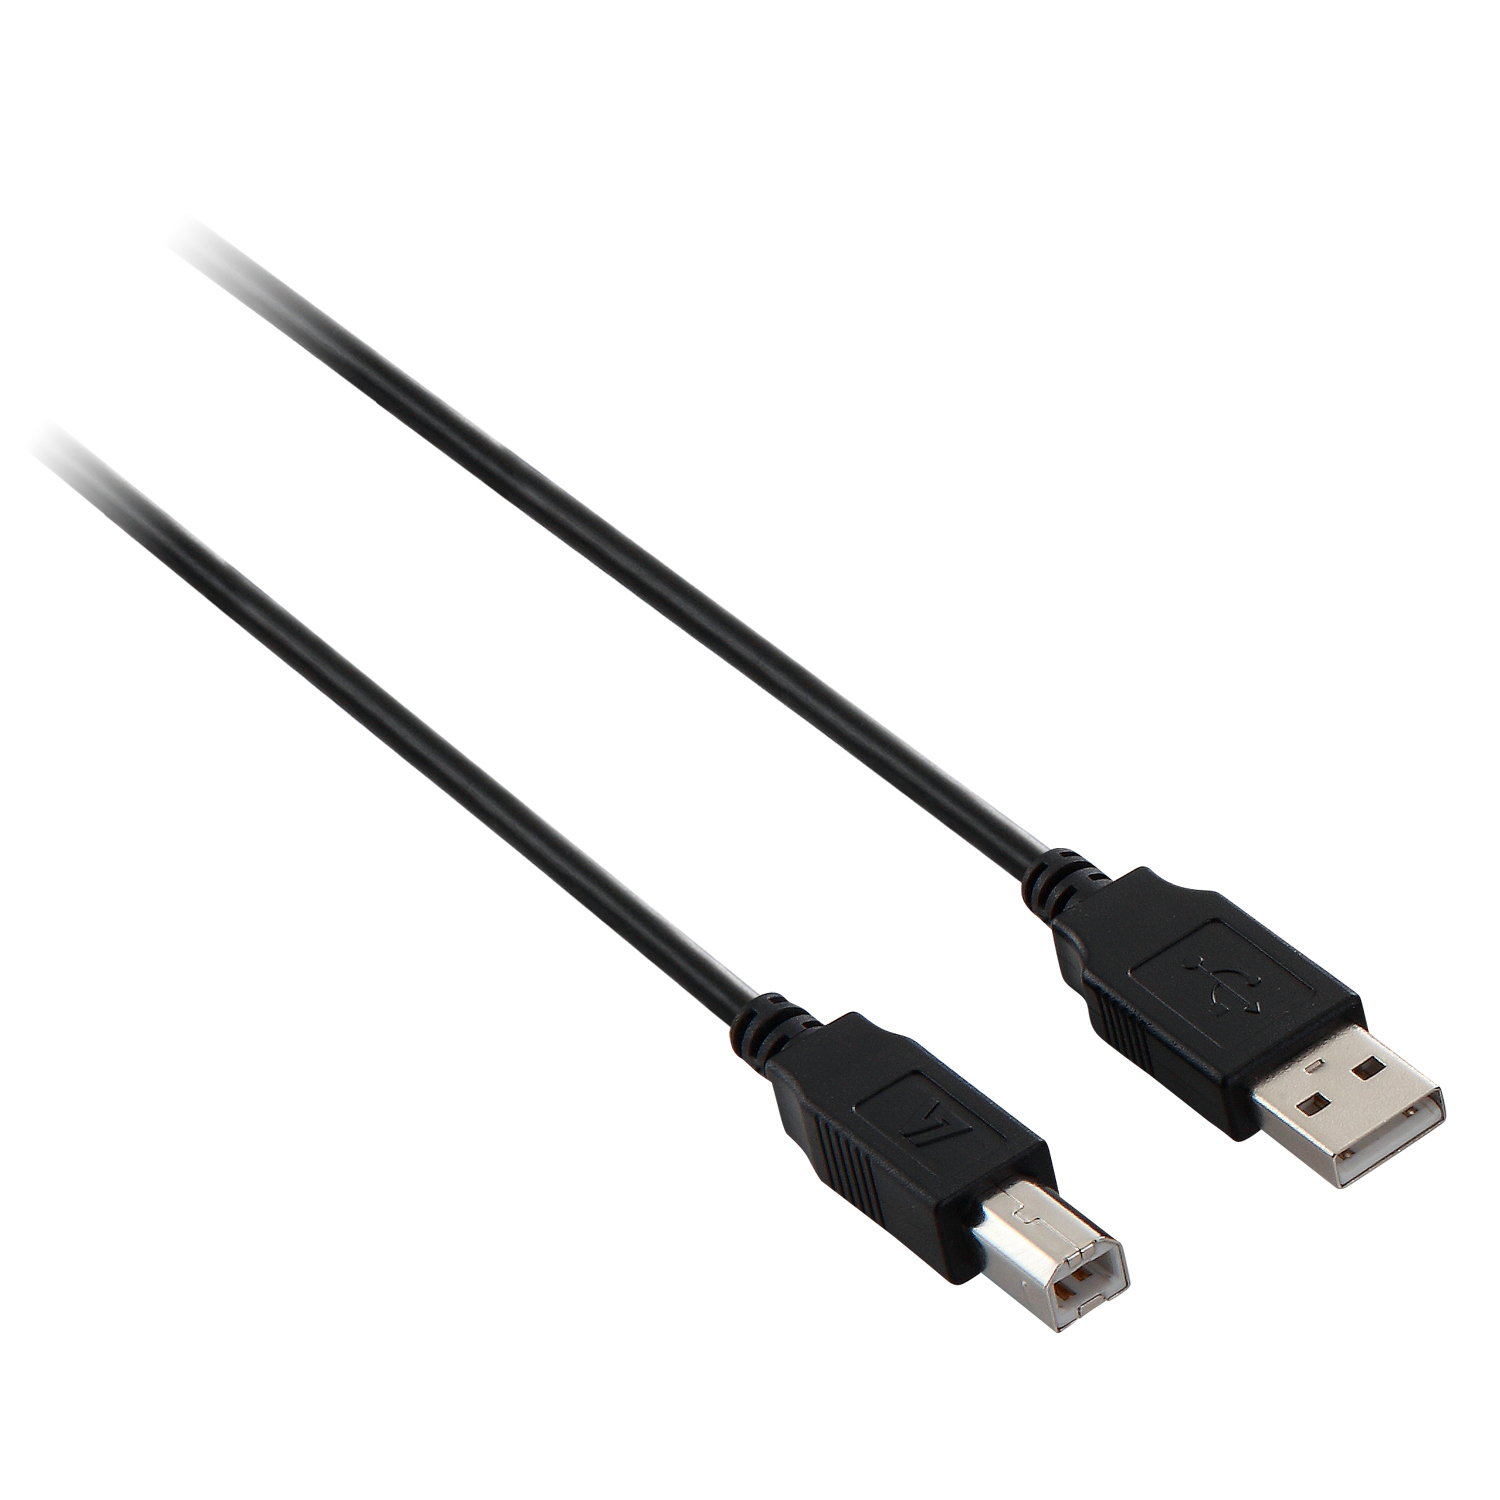 Photos - Cable (video, audio, USB) V7 Black USB Cable USB 2.0 A Male to USB 2.0 B Male 3m 10ft V7E2USB2AB-03M 